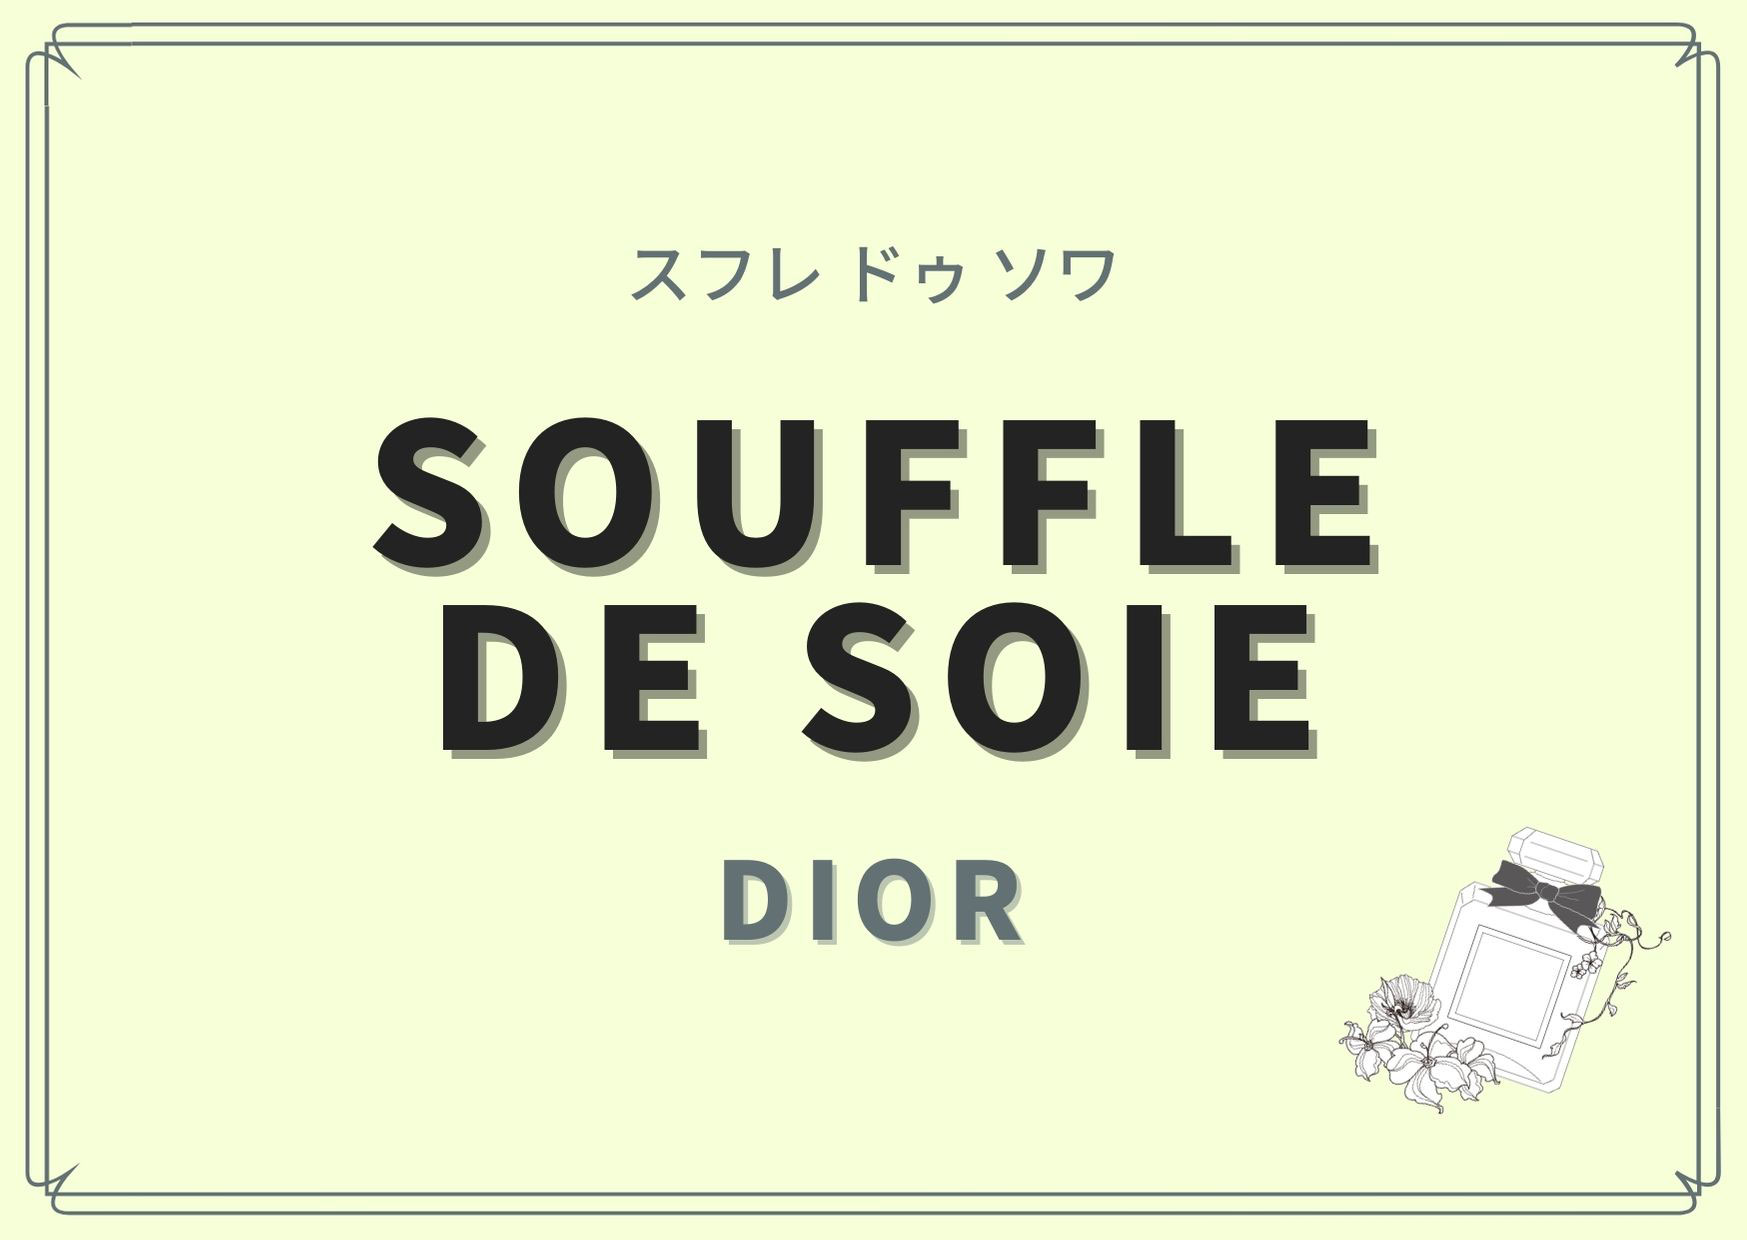 SOUFFLE DE SOIE（スフレ ドゥ ソワ）/DIOR（ディオール）の香水レビュー - オーダーメイドフレグランス&アルコールインクアート